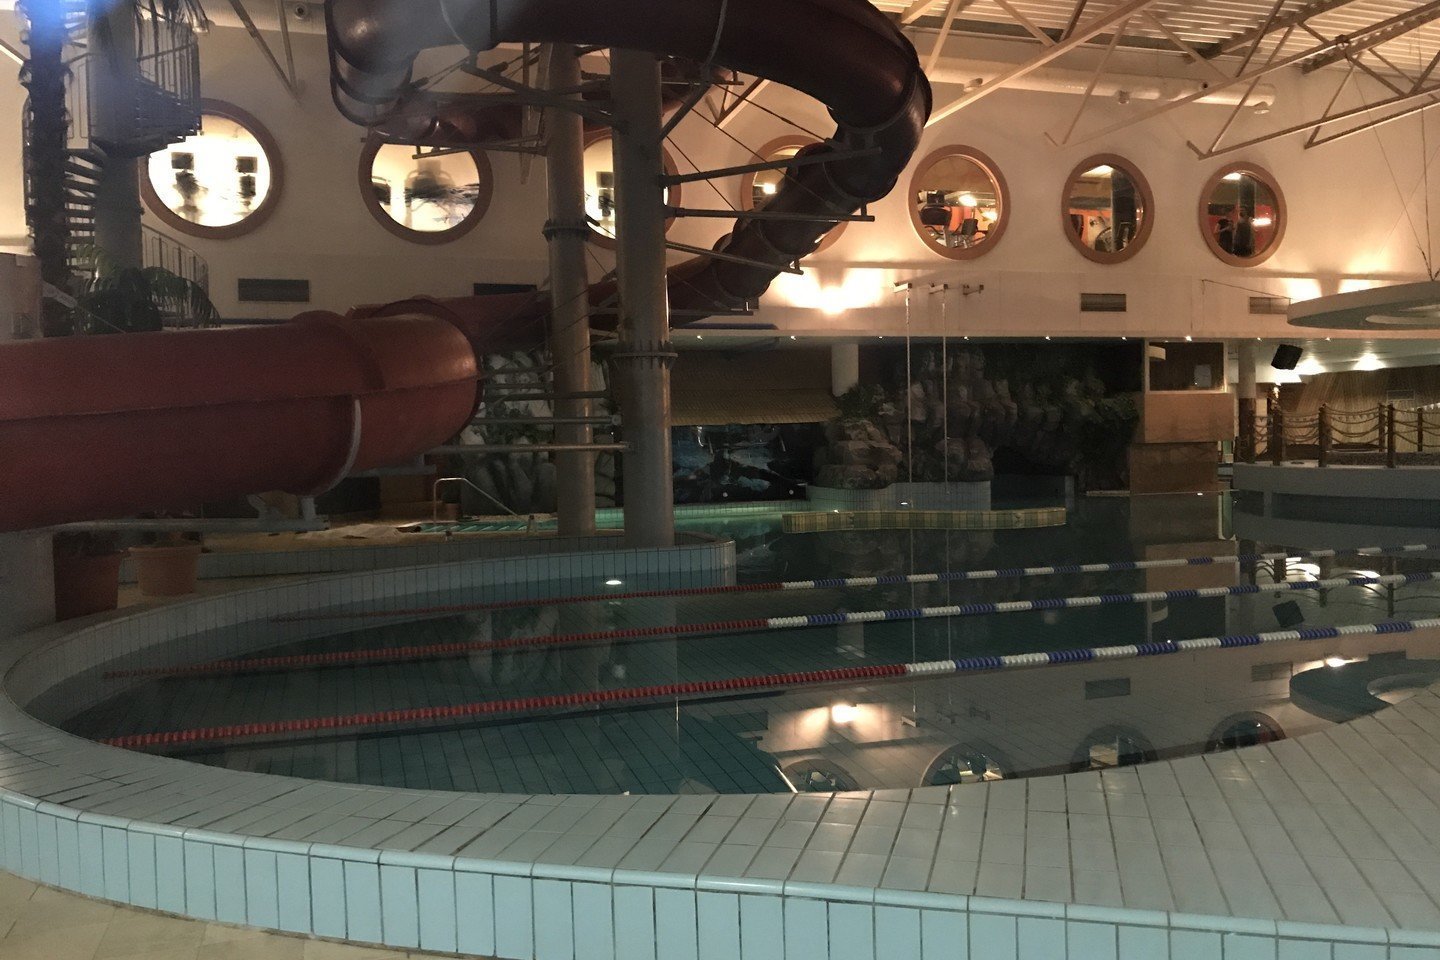  7-metis berniukas sporto klubo baseine nuskendo 2017 m. rugsėji.<br> V.Ščiavinsko nuotr.